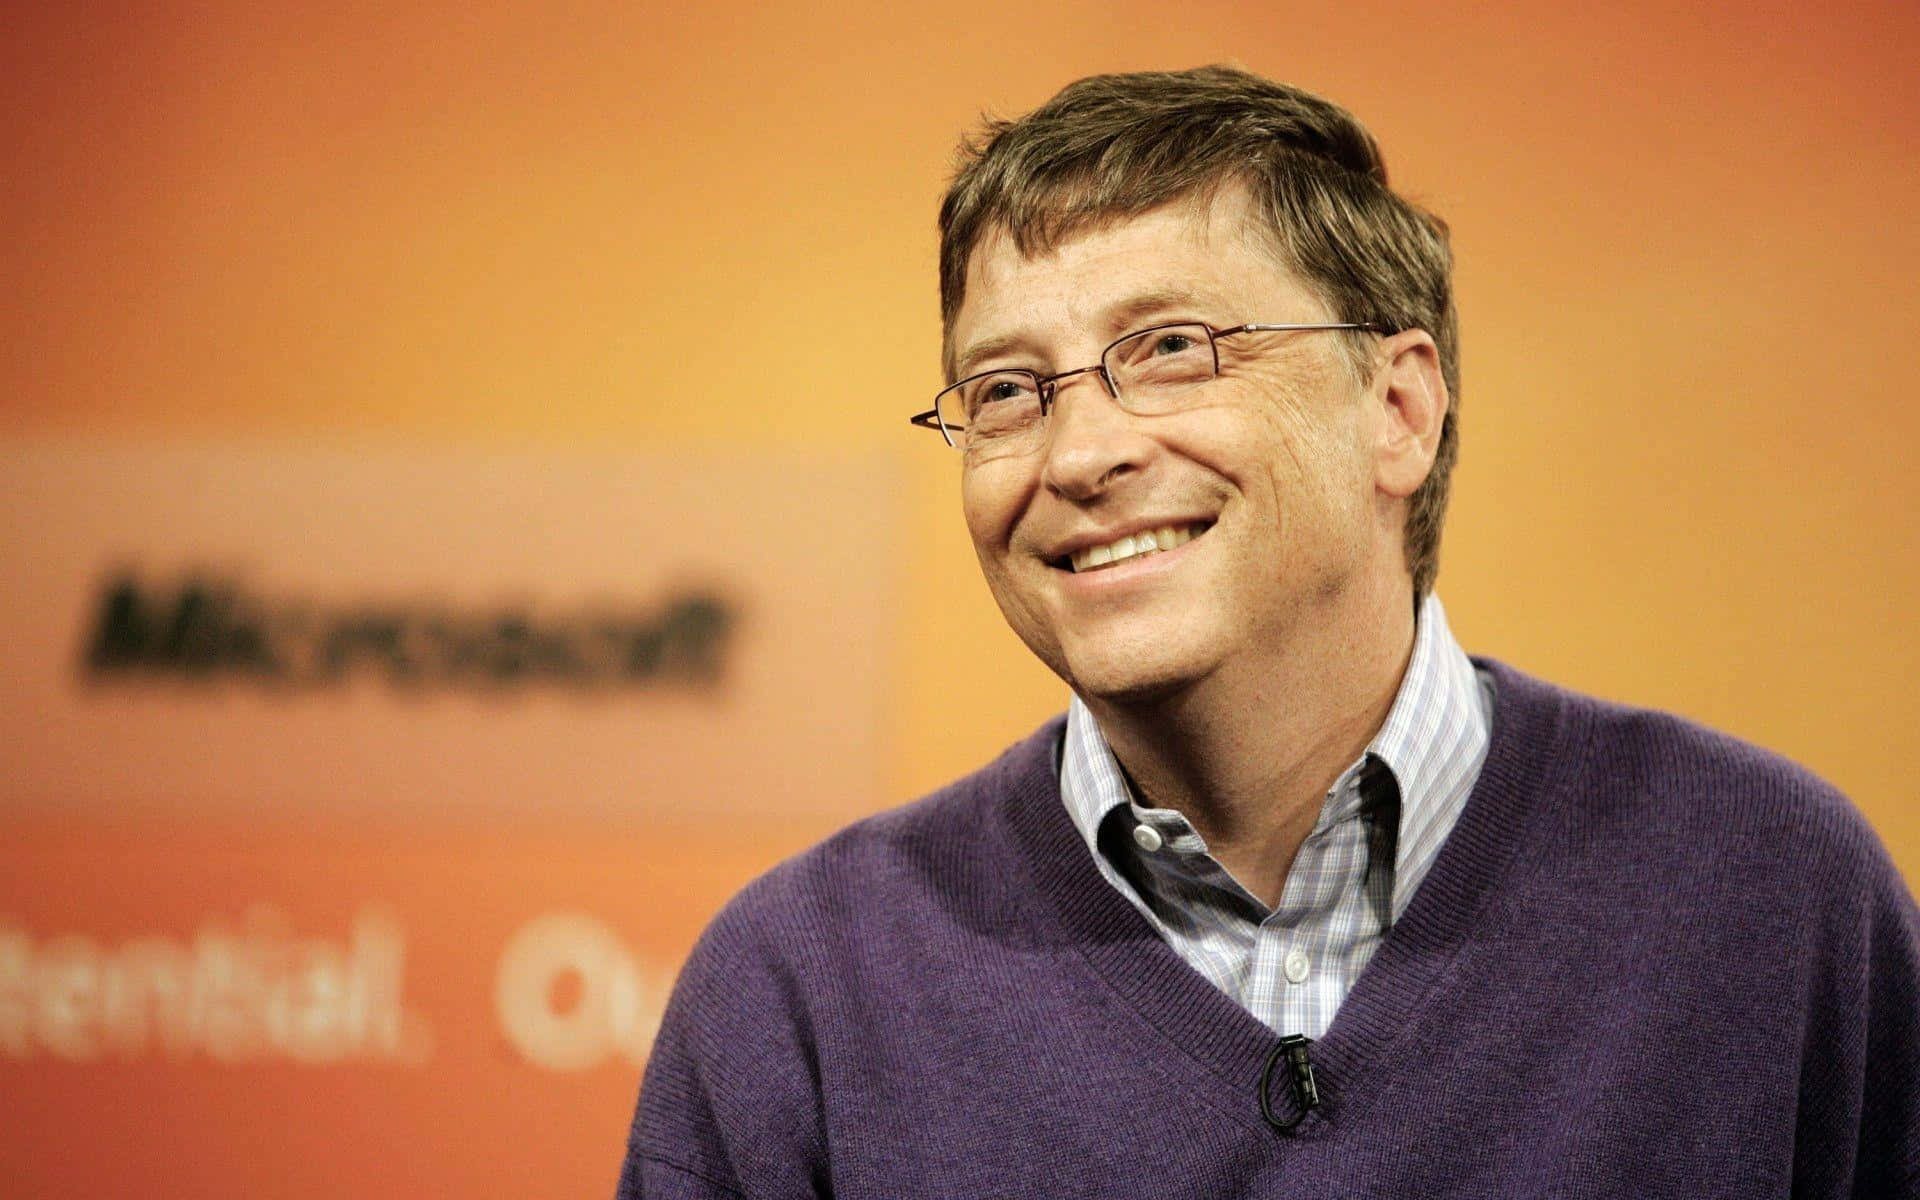 Bill Gates, Business Magnate and Philanthropist